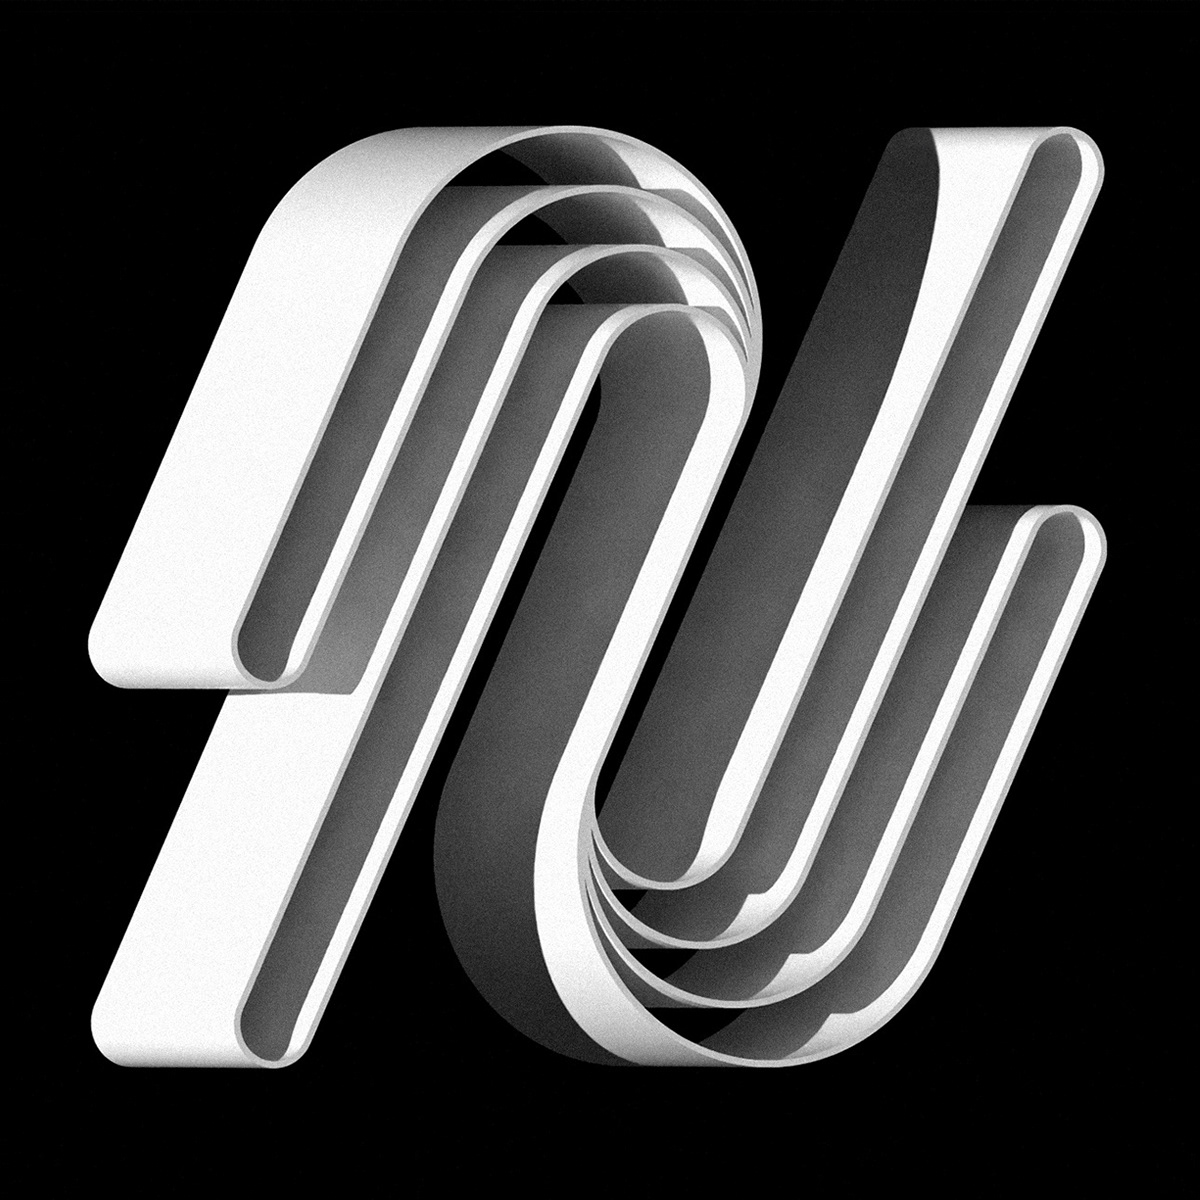 type typedesign lettering typography   3D blackandwhite adobe illustrator Adobe Photoshop Logo Design 36daysoftype